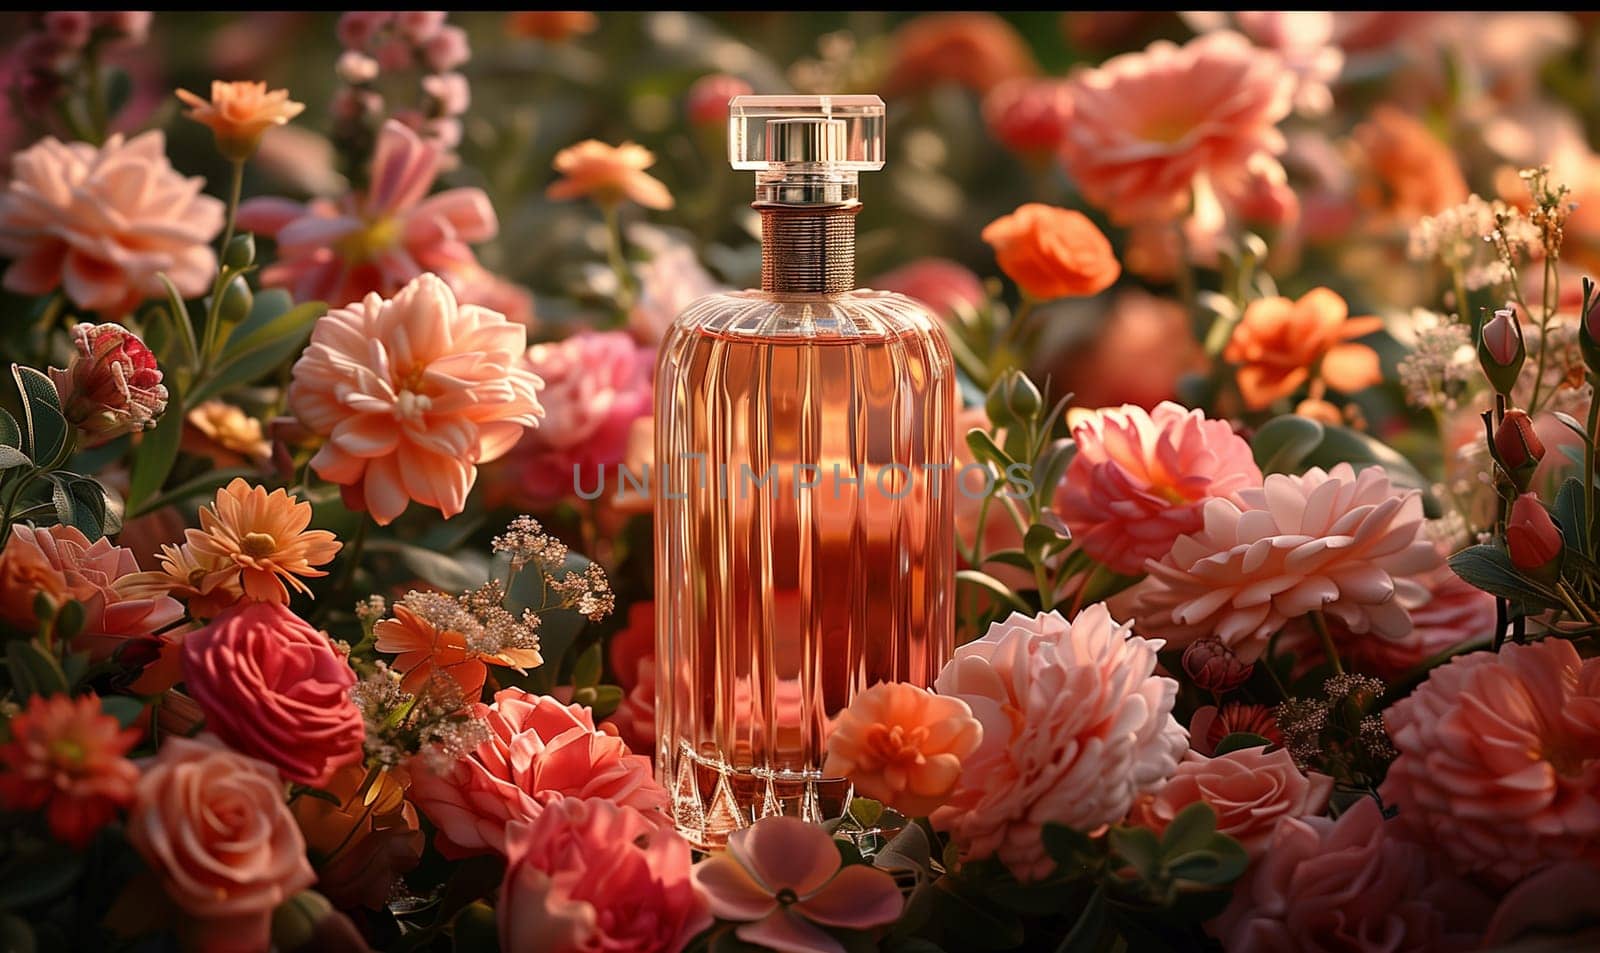 Elegant perfume bottle among flowers in retro style. Selective focus.